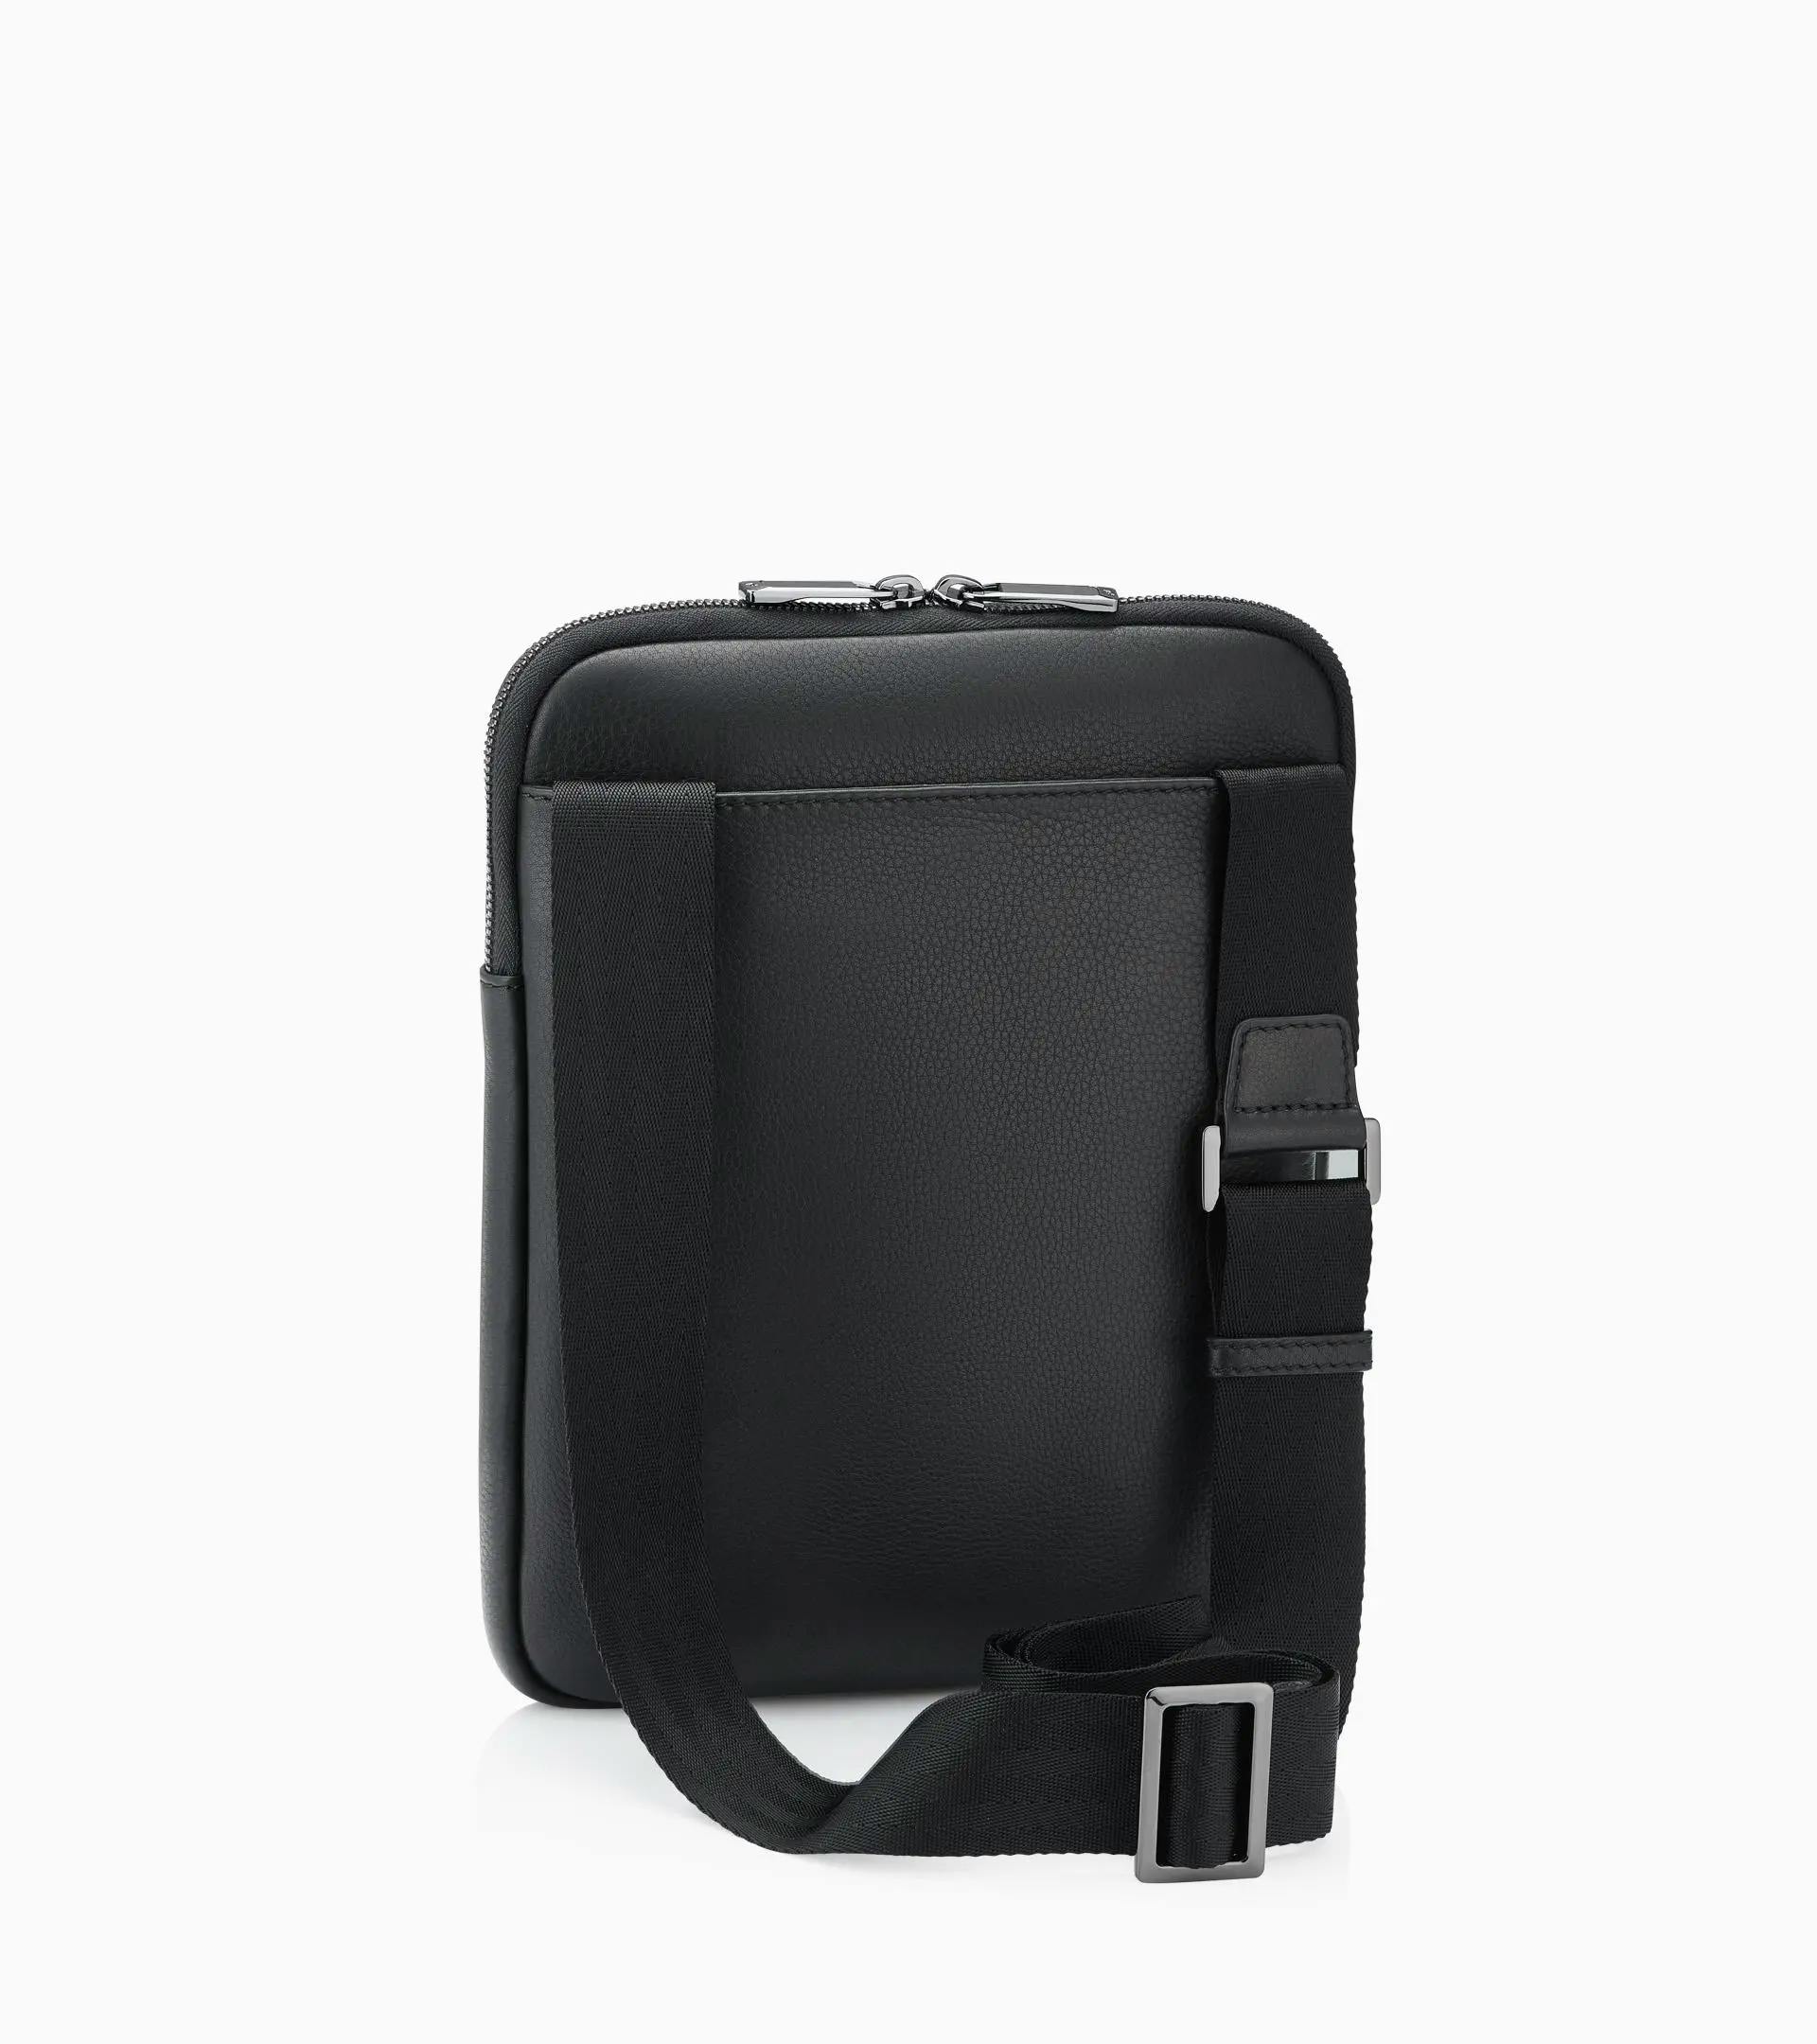 Porsche fashion Lifestyle - Original LV sling bag available